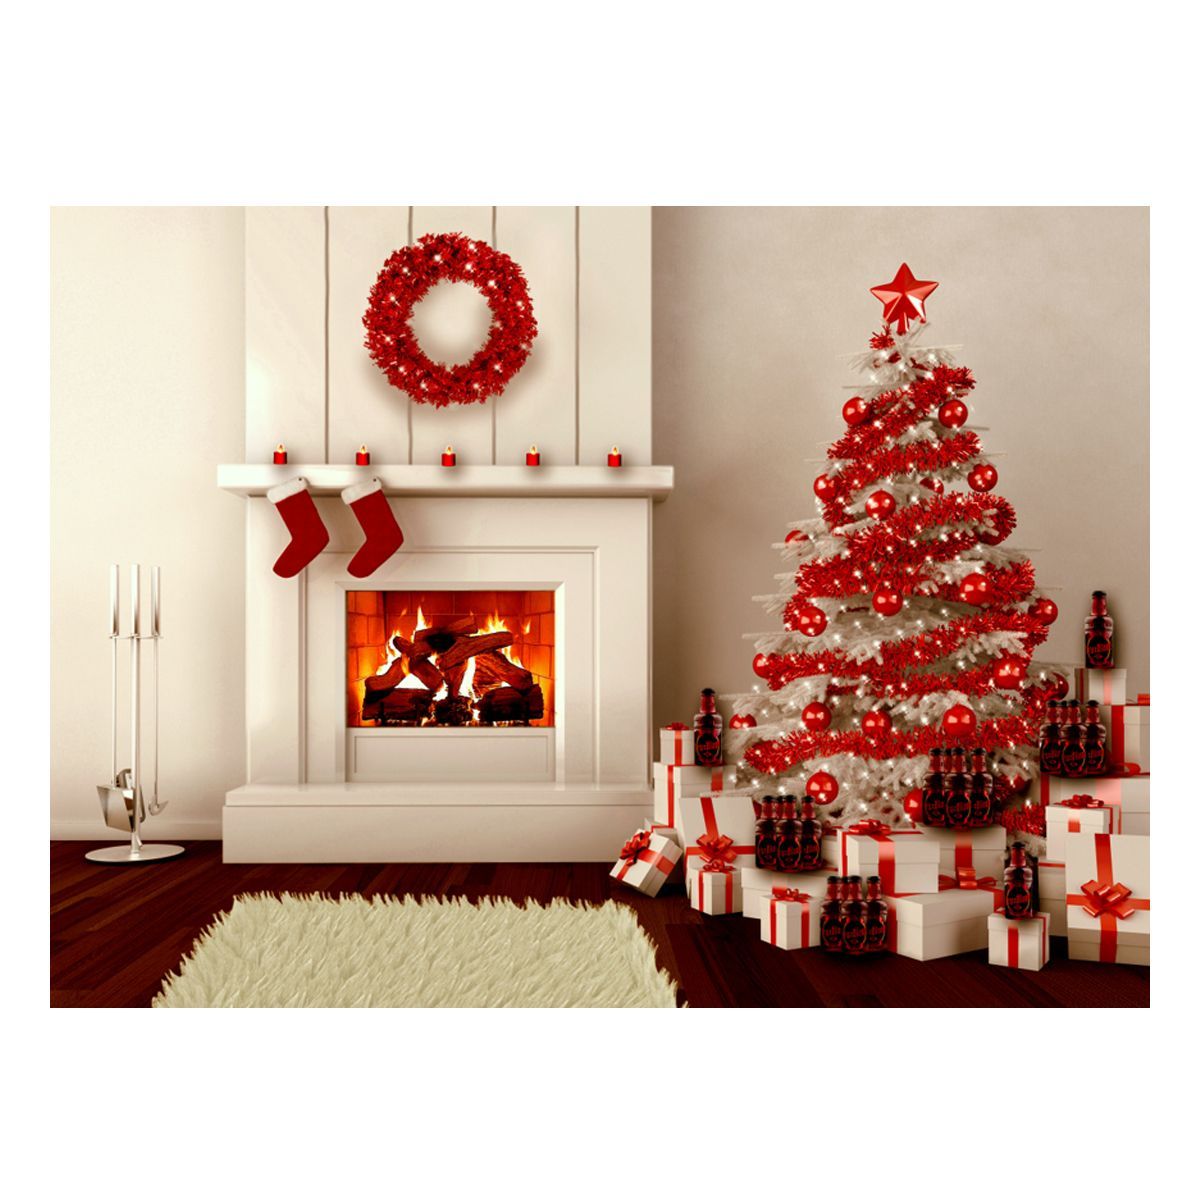 5x7ft-Vinyl-Christmas-Tree-Fireplace-Gifts-Stocking-Background-Photography-Studio-Backdrop-1217122